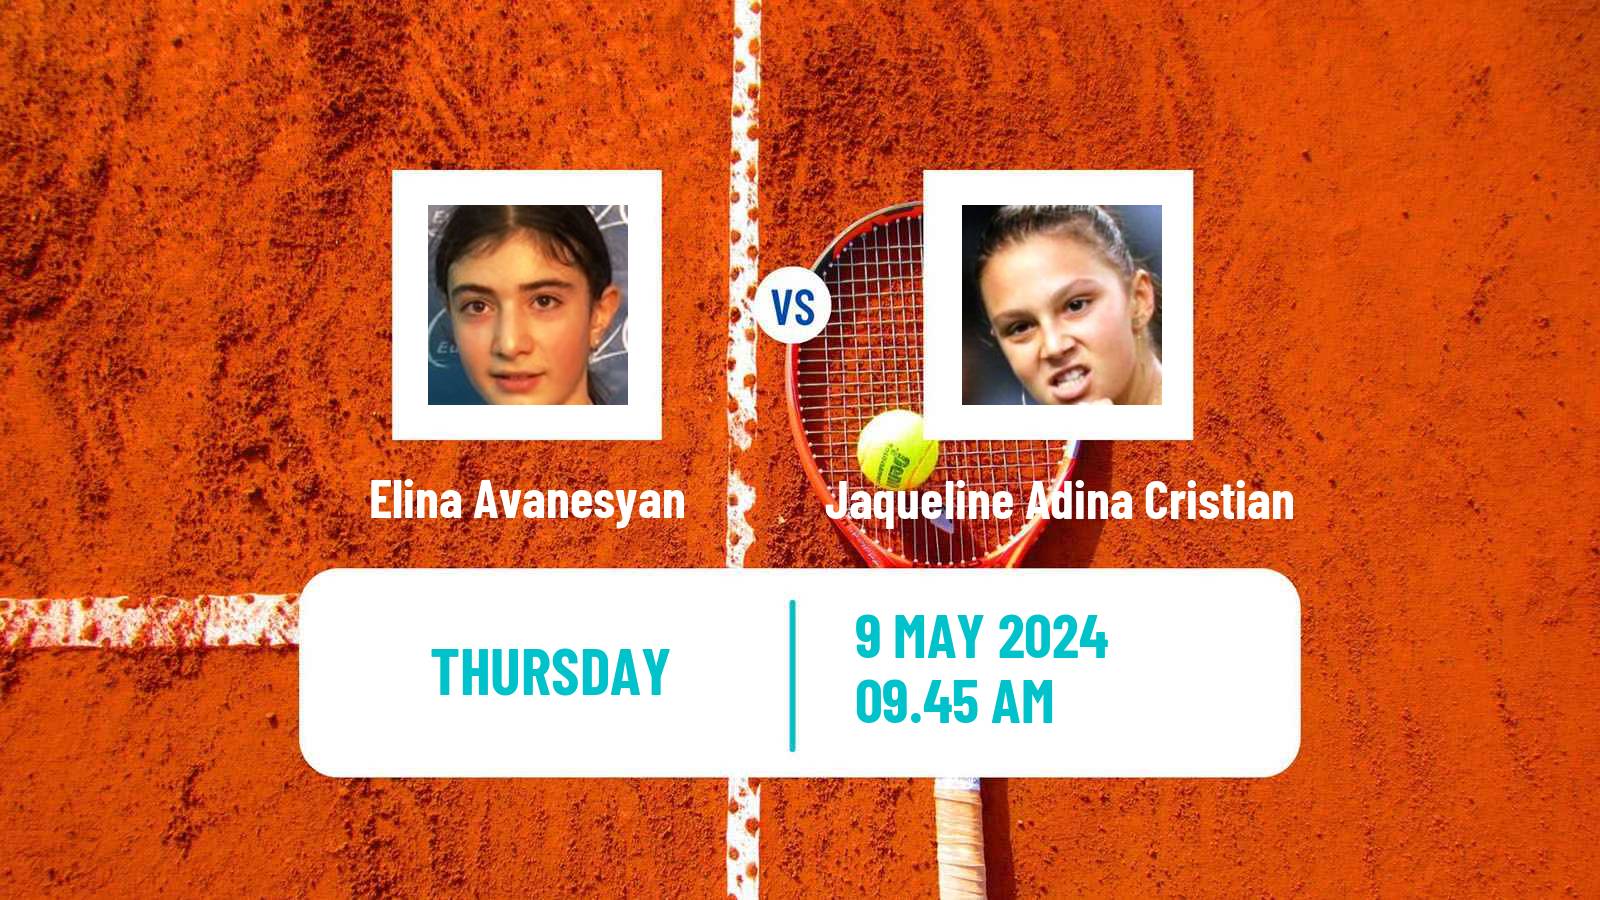 Tennis WTA Roma Elina Avanesyan - Jaqueline Adina Cristian